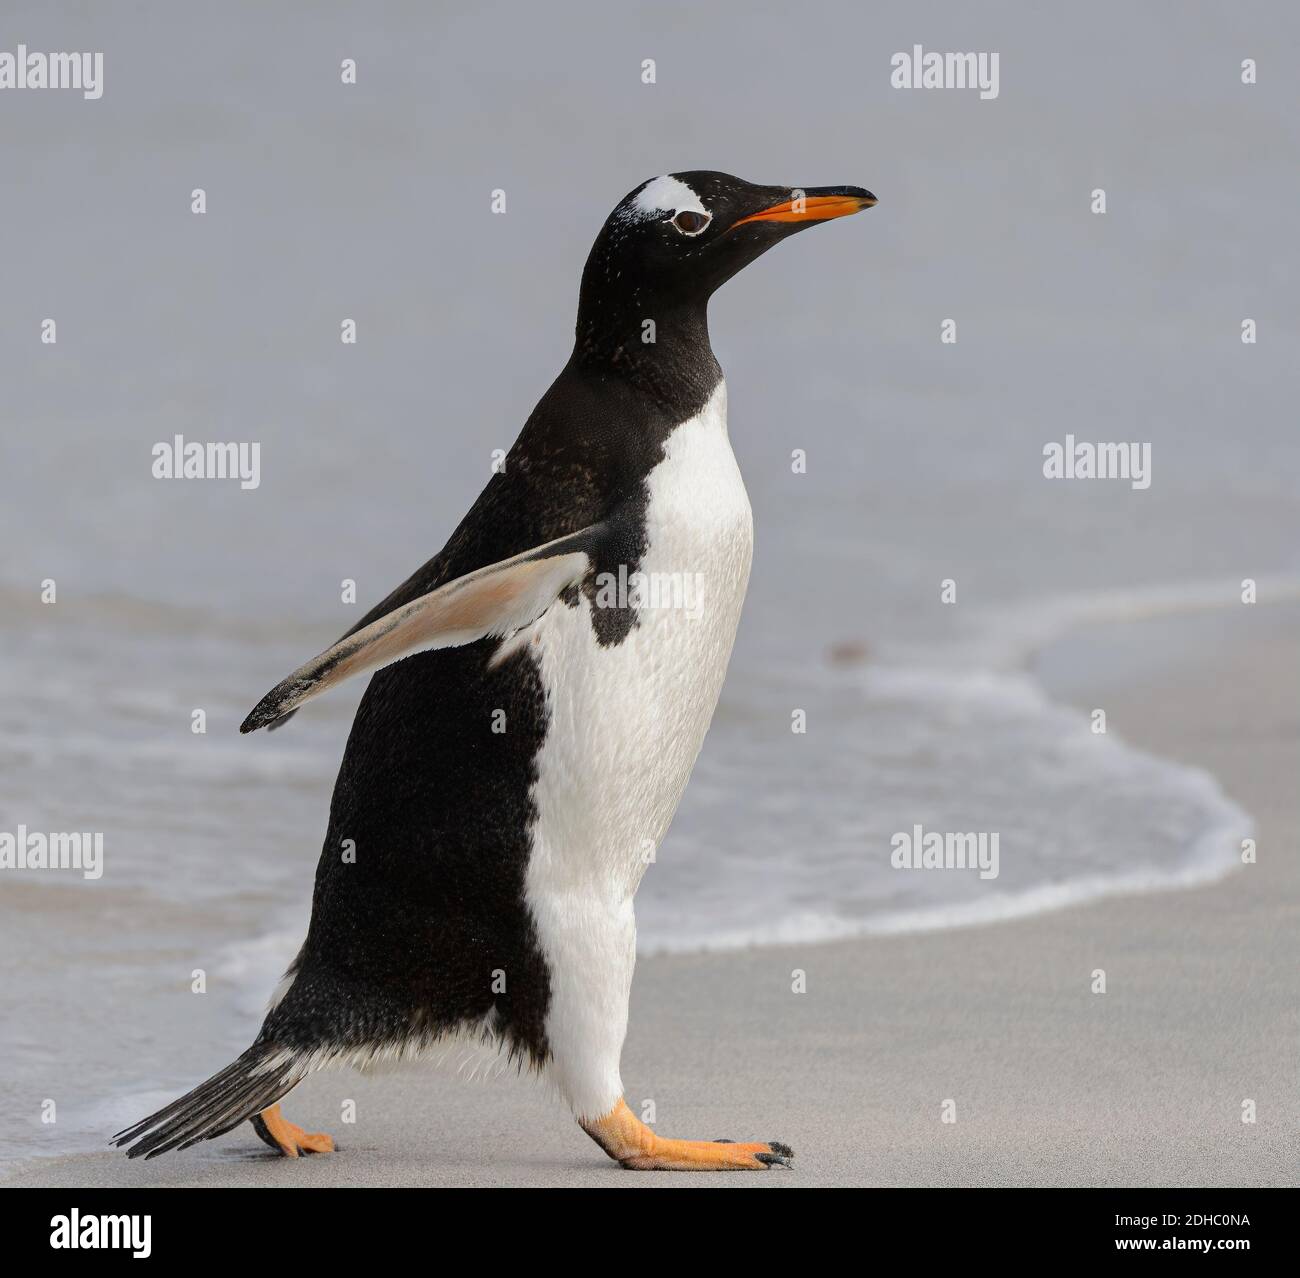 Gentoo penguin walking on water's edge Stock Photo